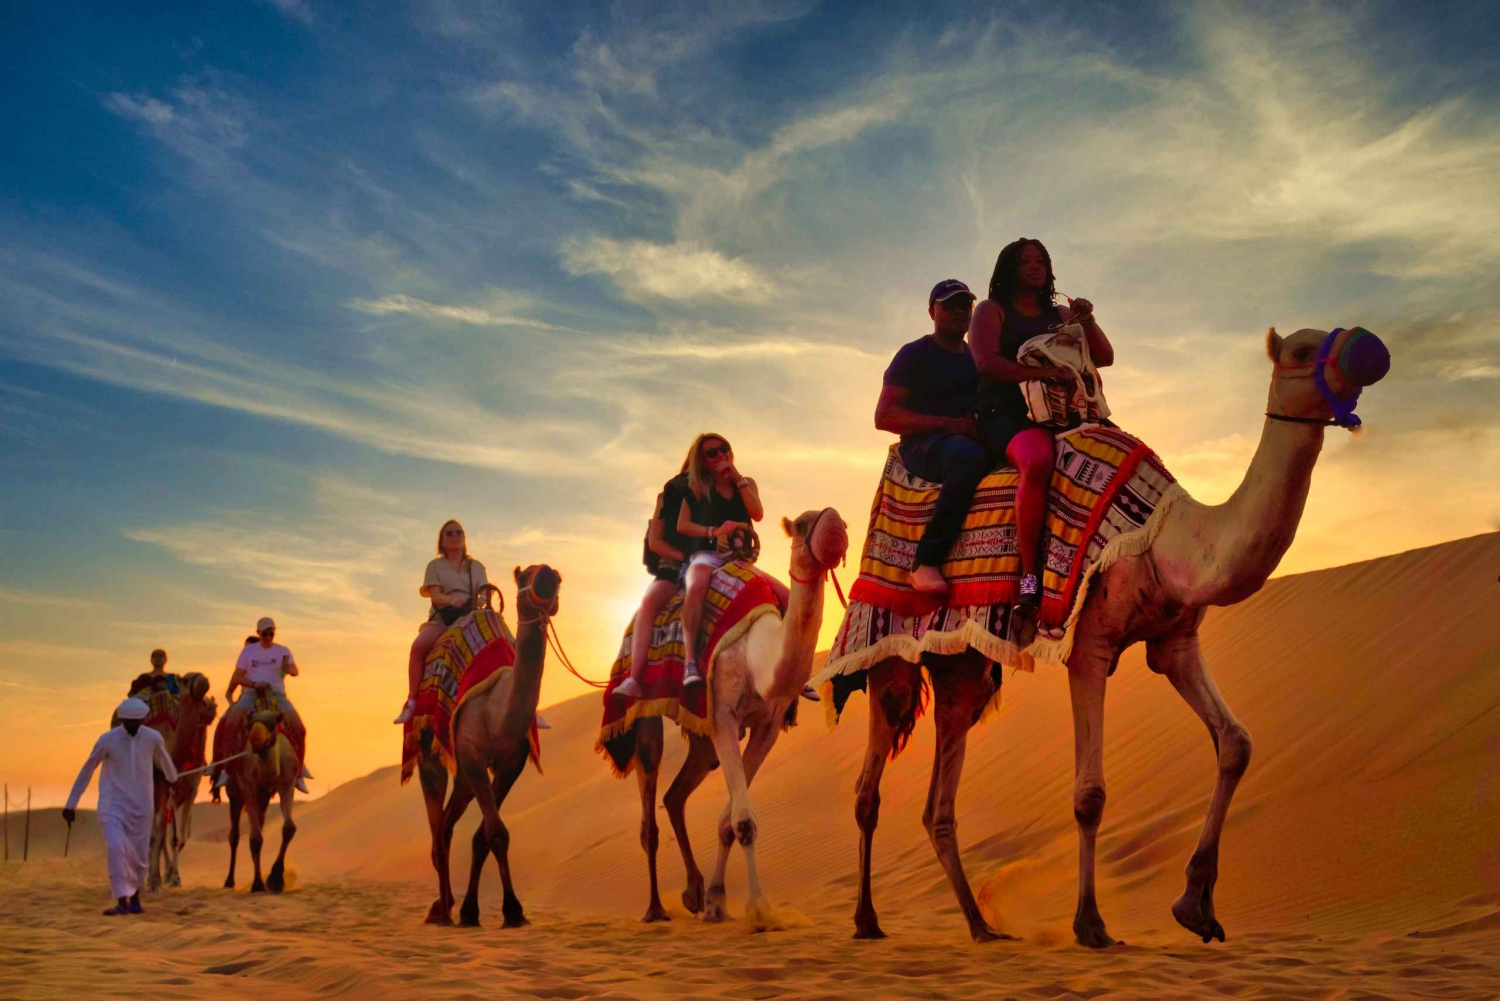 Dubai: Al Khaymassa: Auringonlaskun kamelisafari, tähtitaivaan katselu, grillaus Al Khaymassa